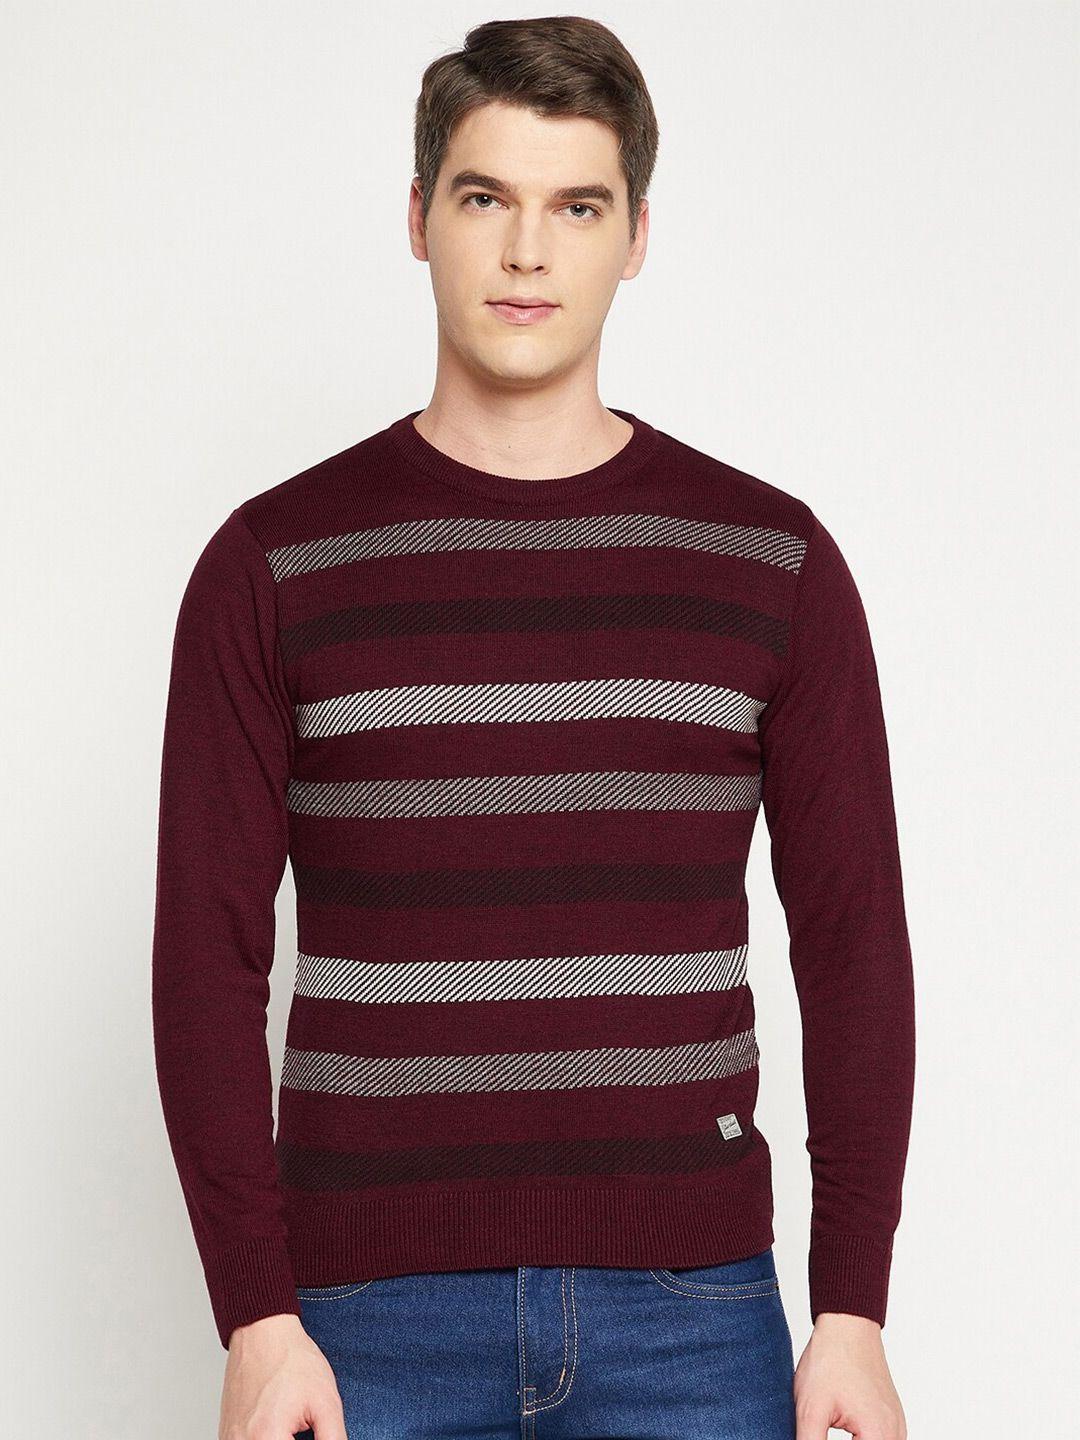 duke-men-maroon-&-grey-striped-pullover